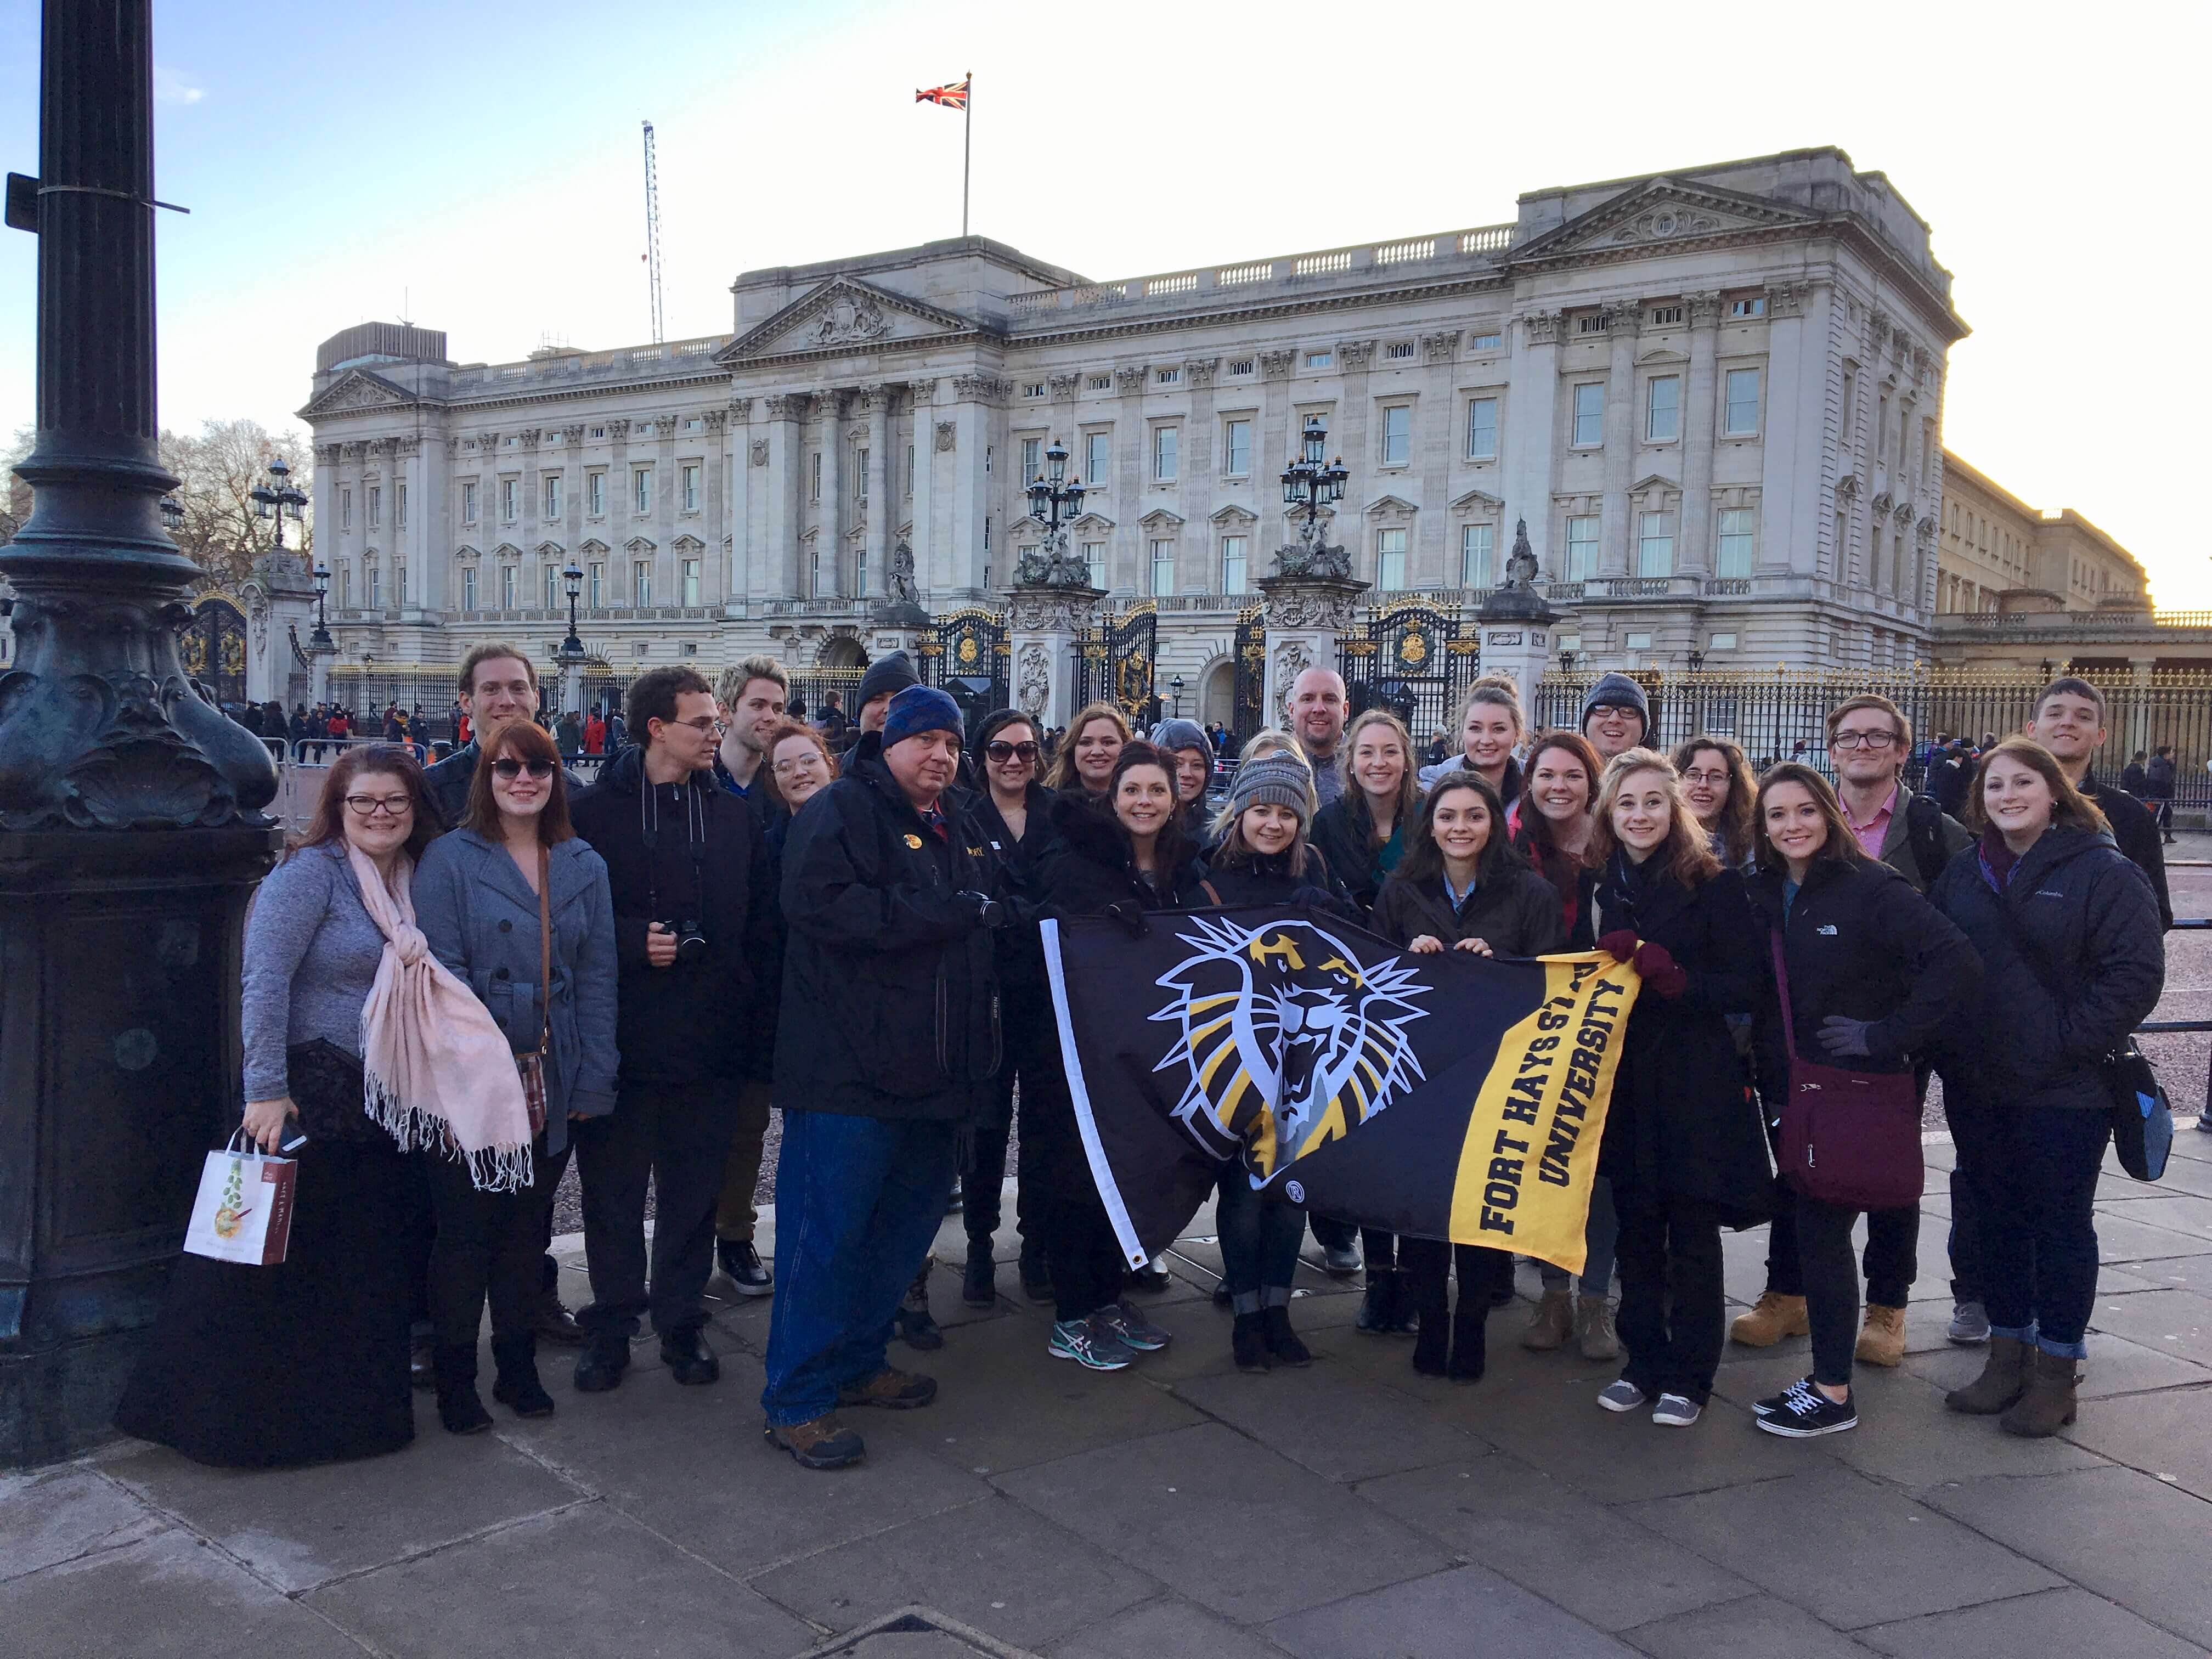 Entire group outside Buckingham Palace